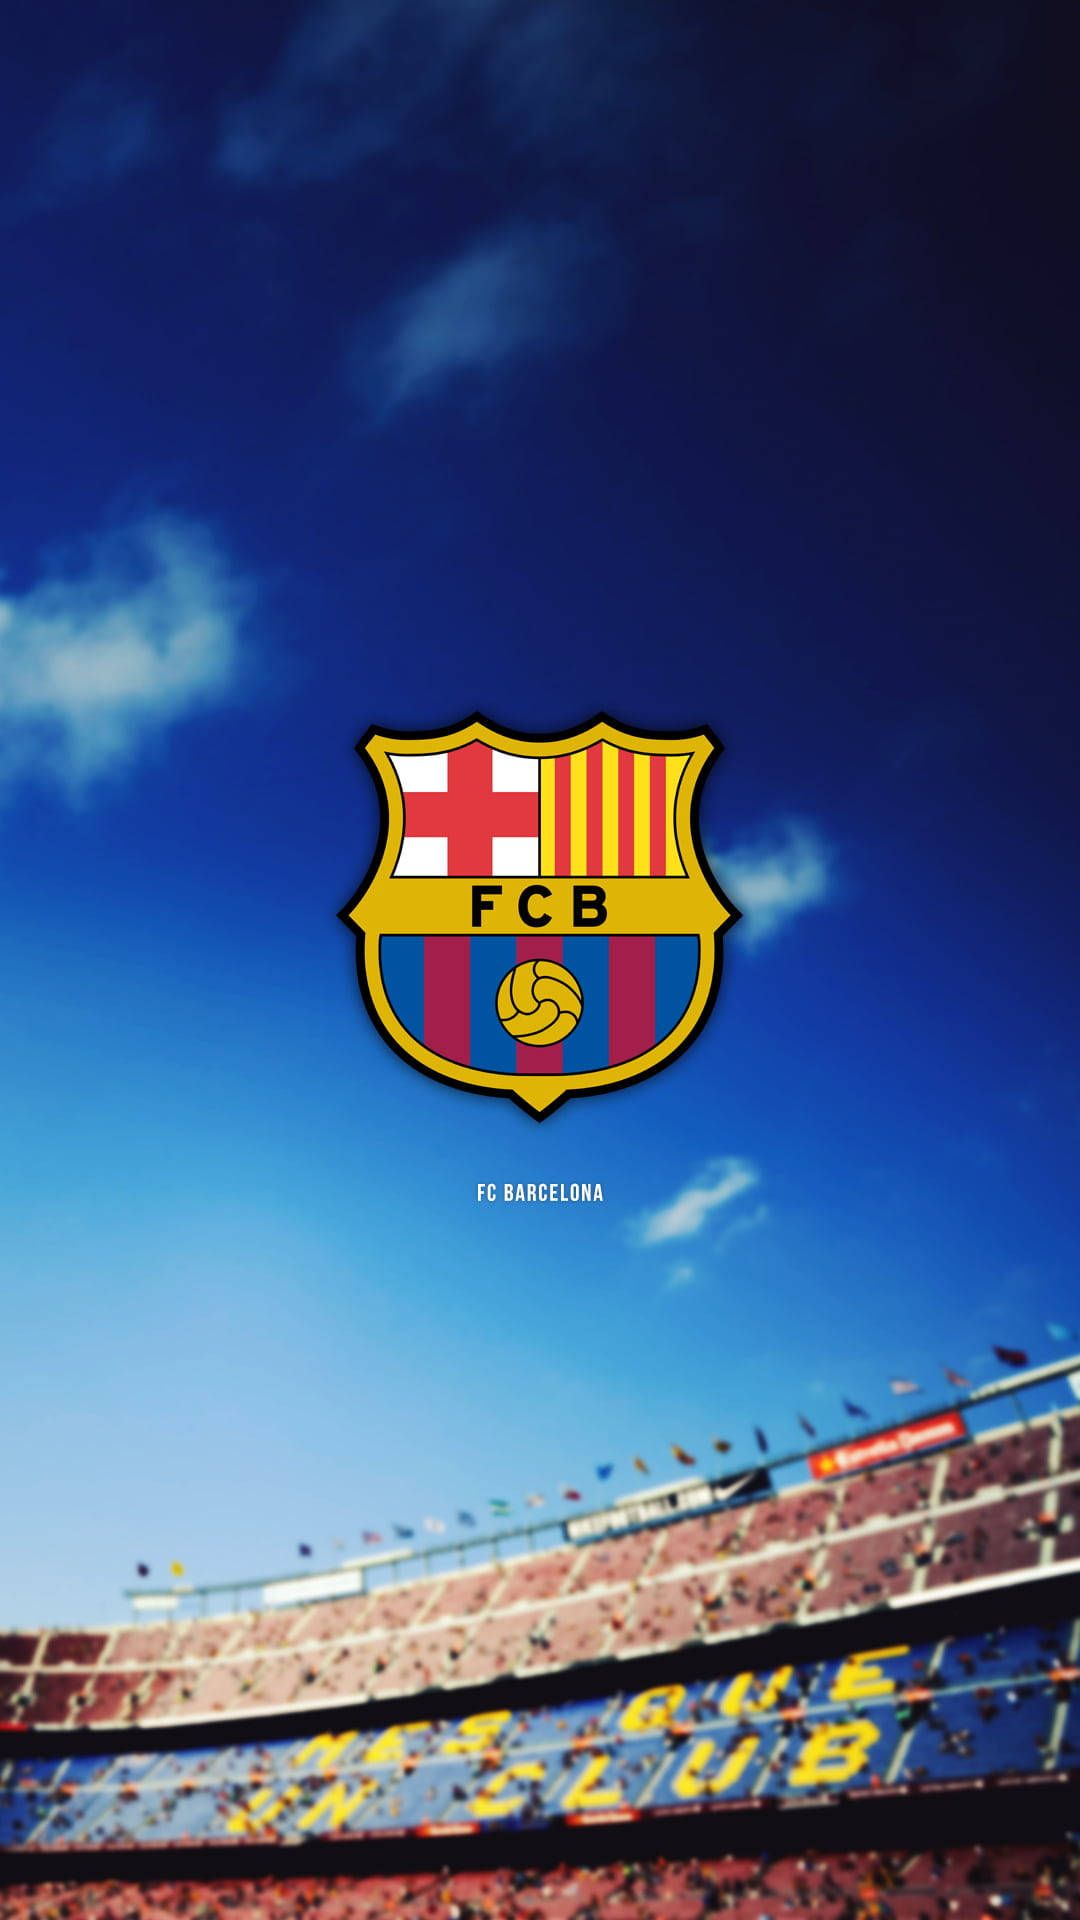  Barça Hintergrundbild 1080x1920. Downloaden Barcelonafc Logo Im Himmel Wallpaper